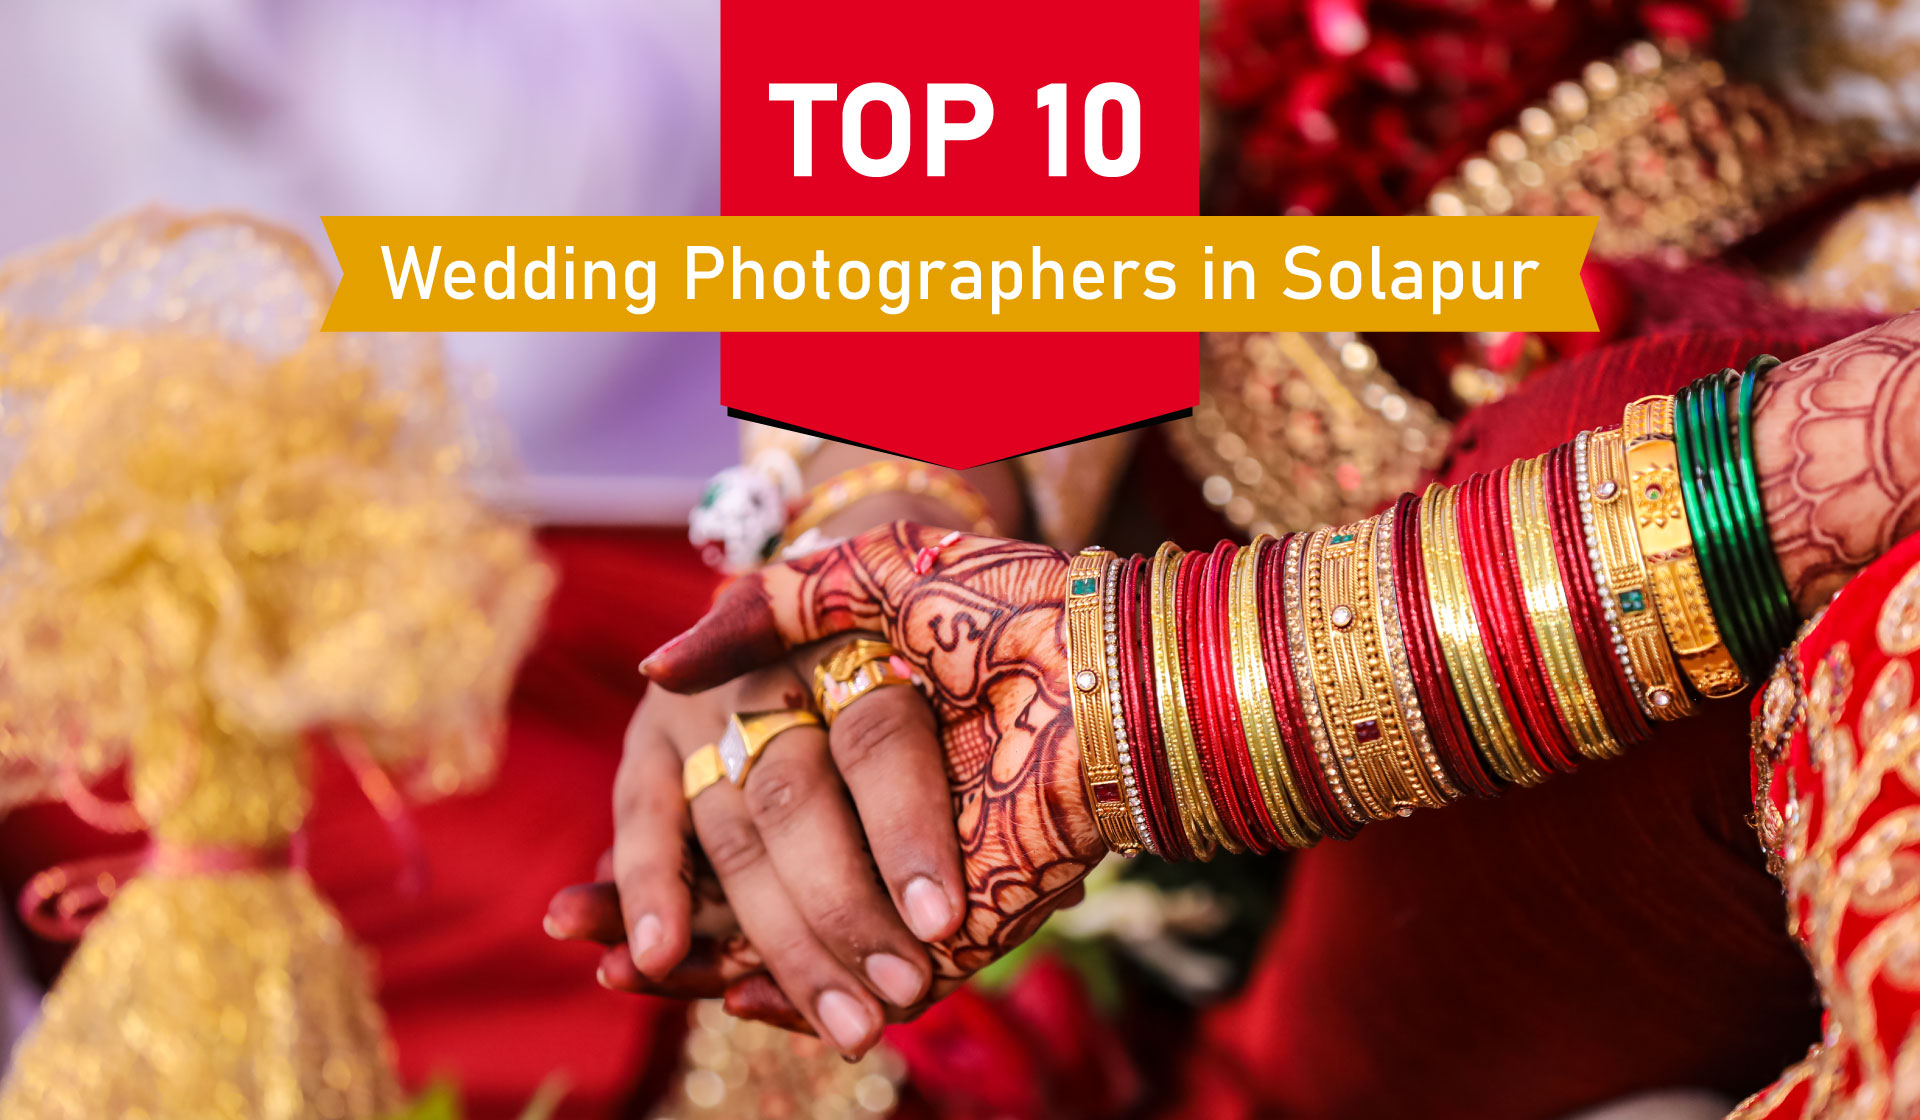 Top 10 Wedding Photographers in Solapur